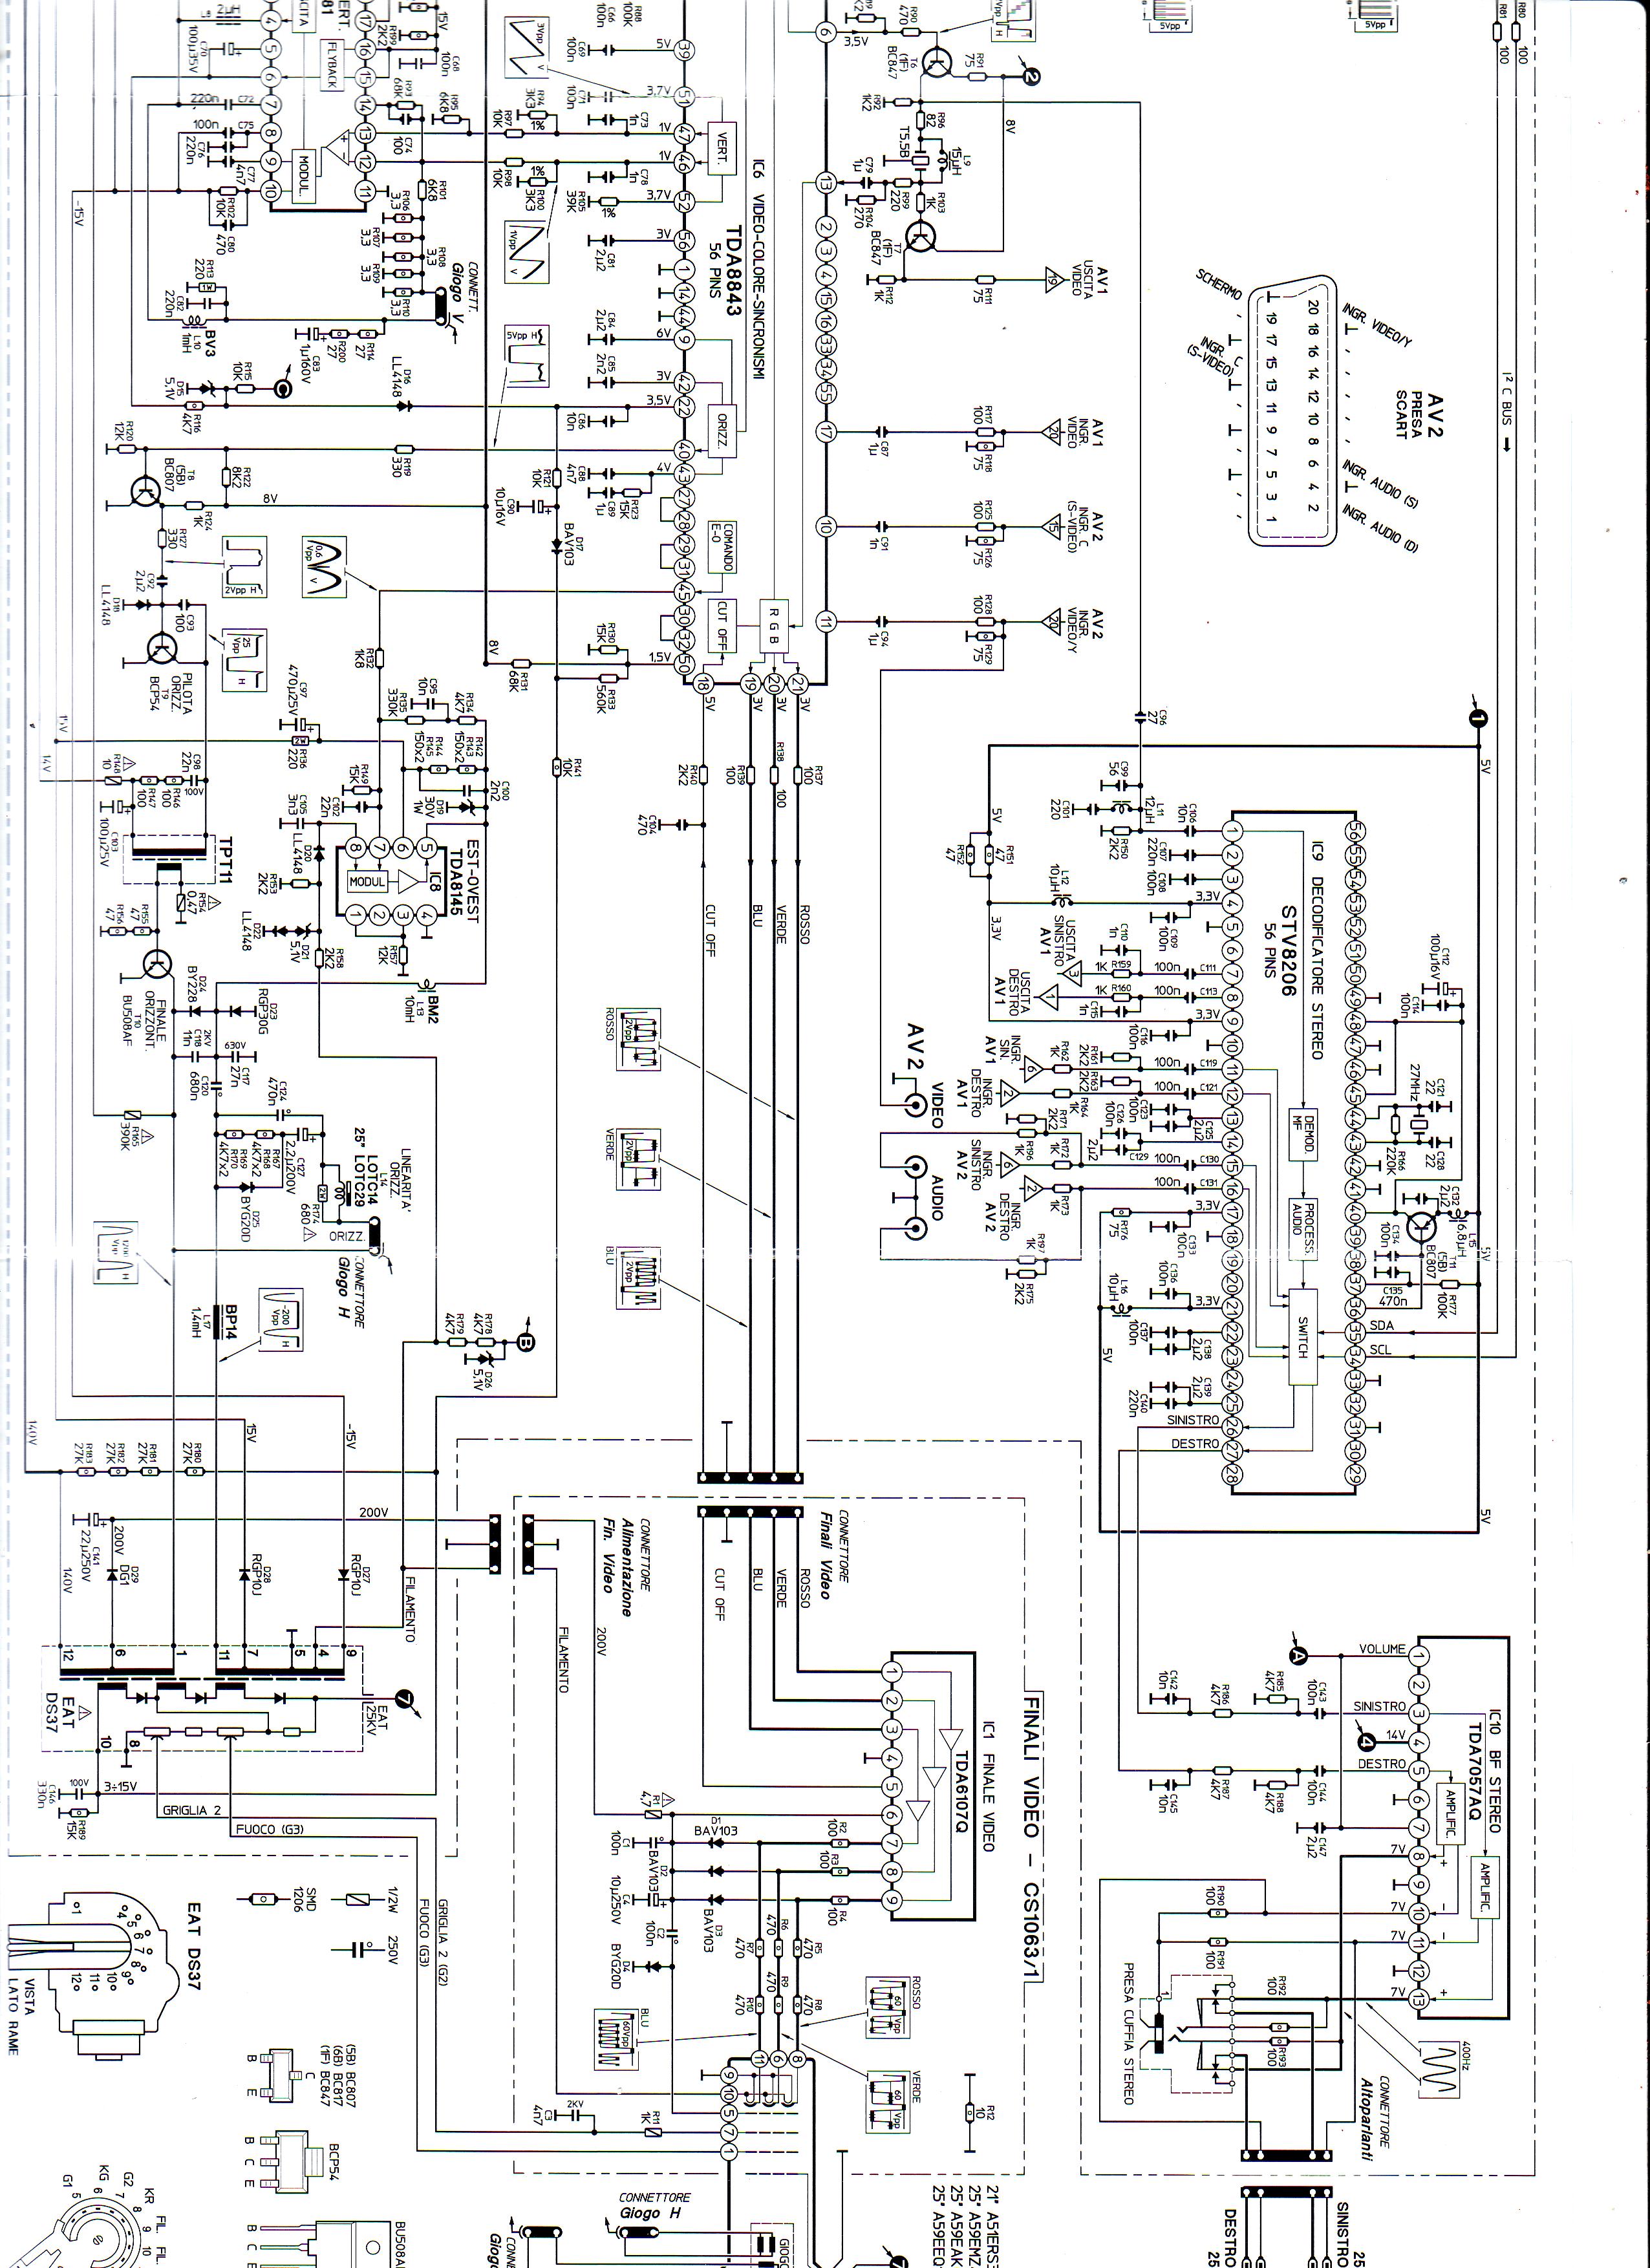 Mivar 25S51 Schematic diagram of new Mivar
Thx Eservice for your big help!